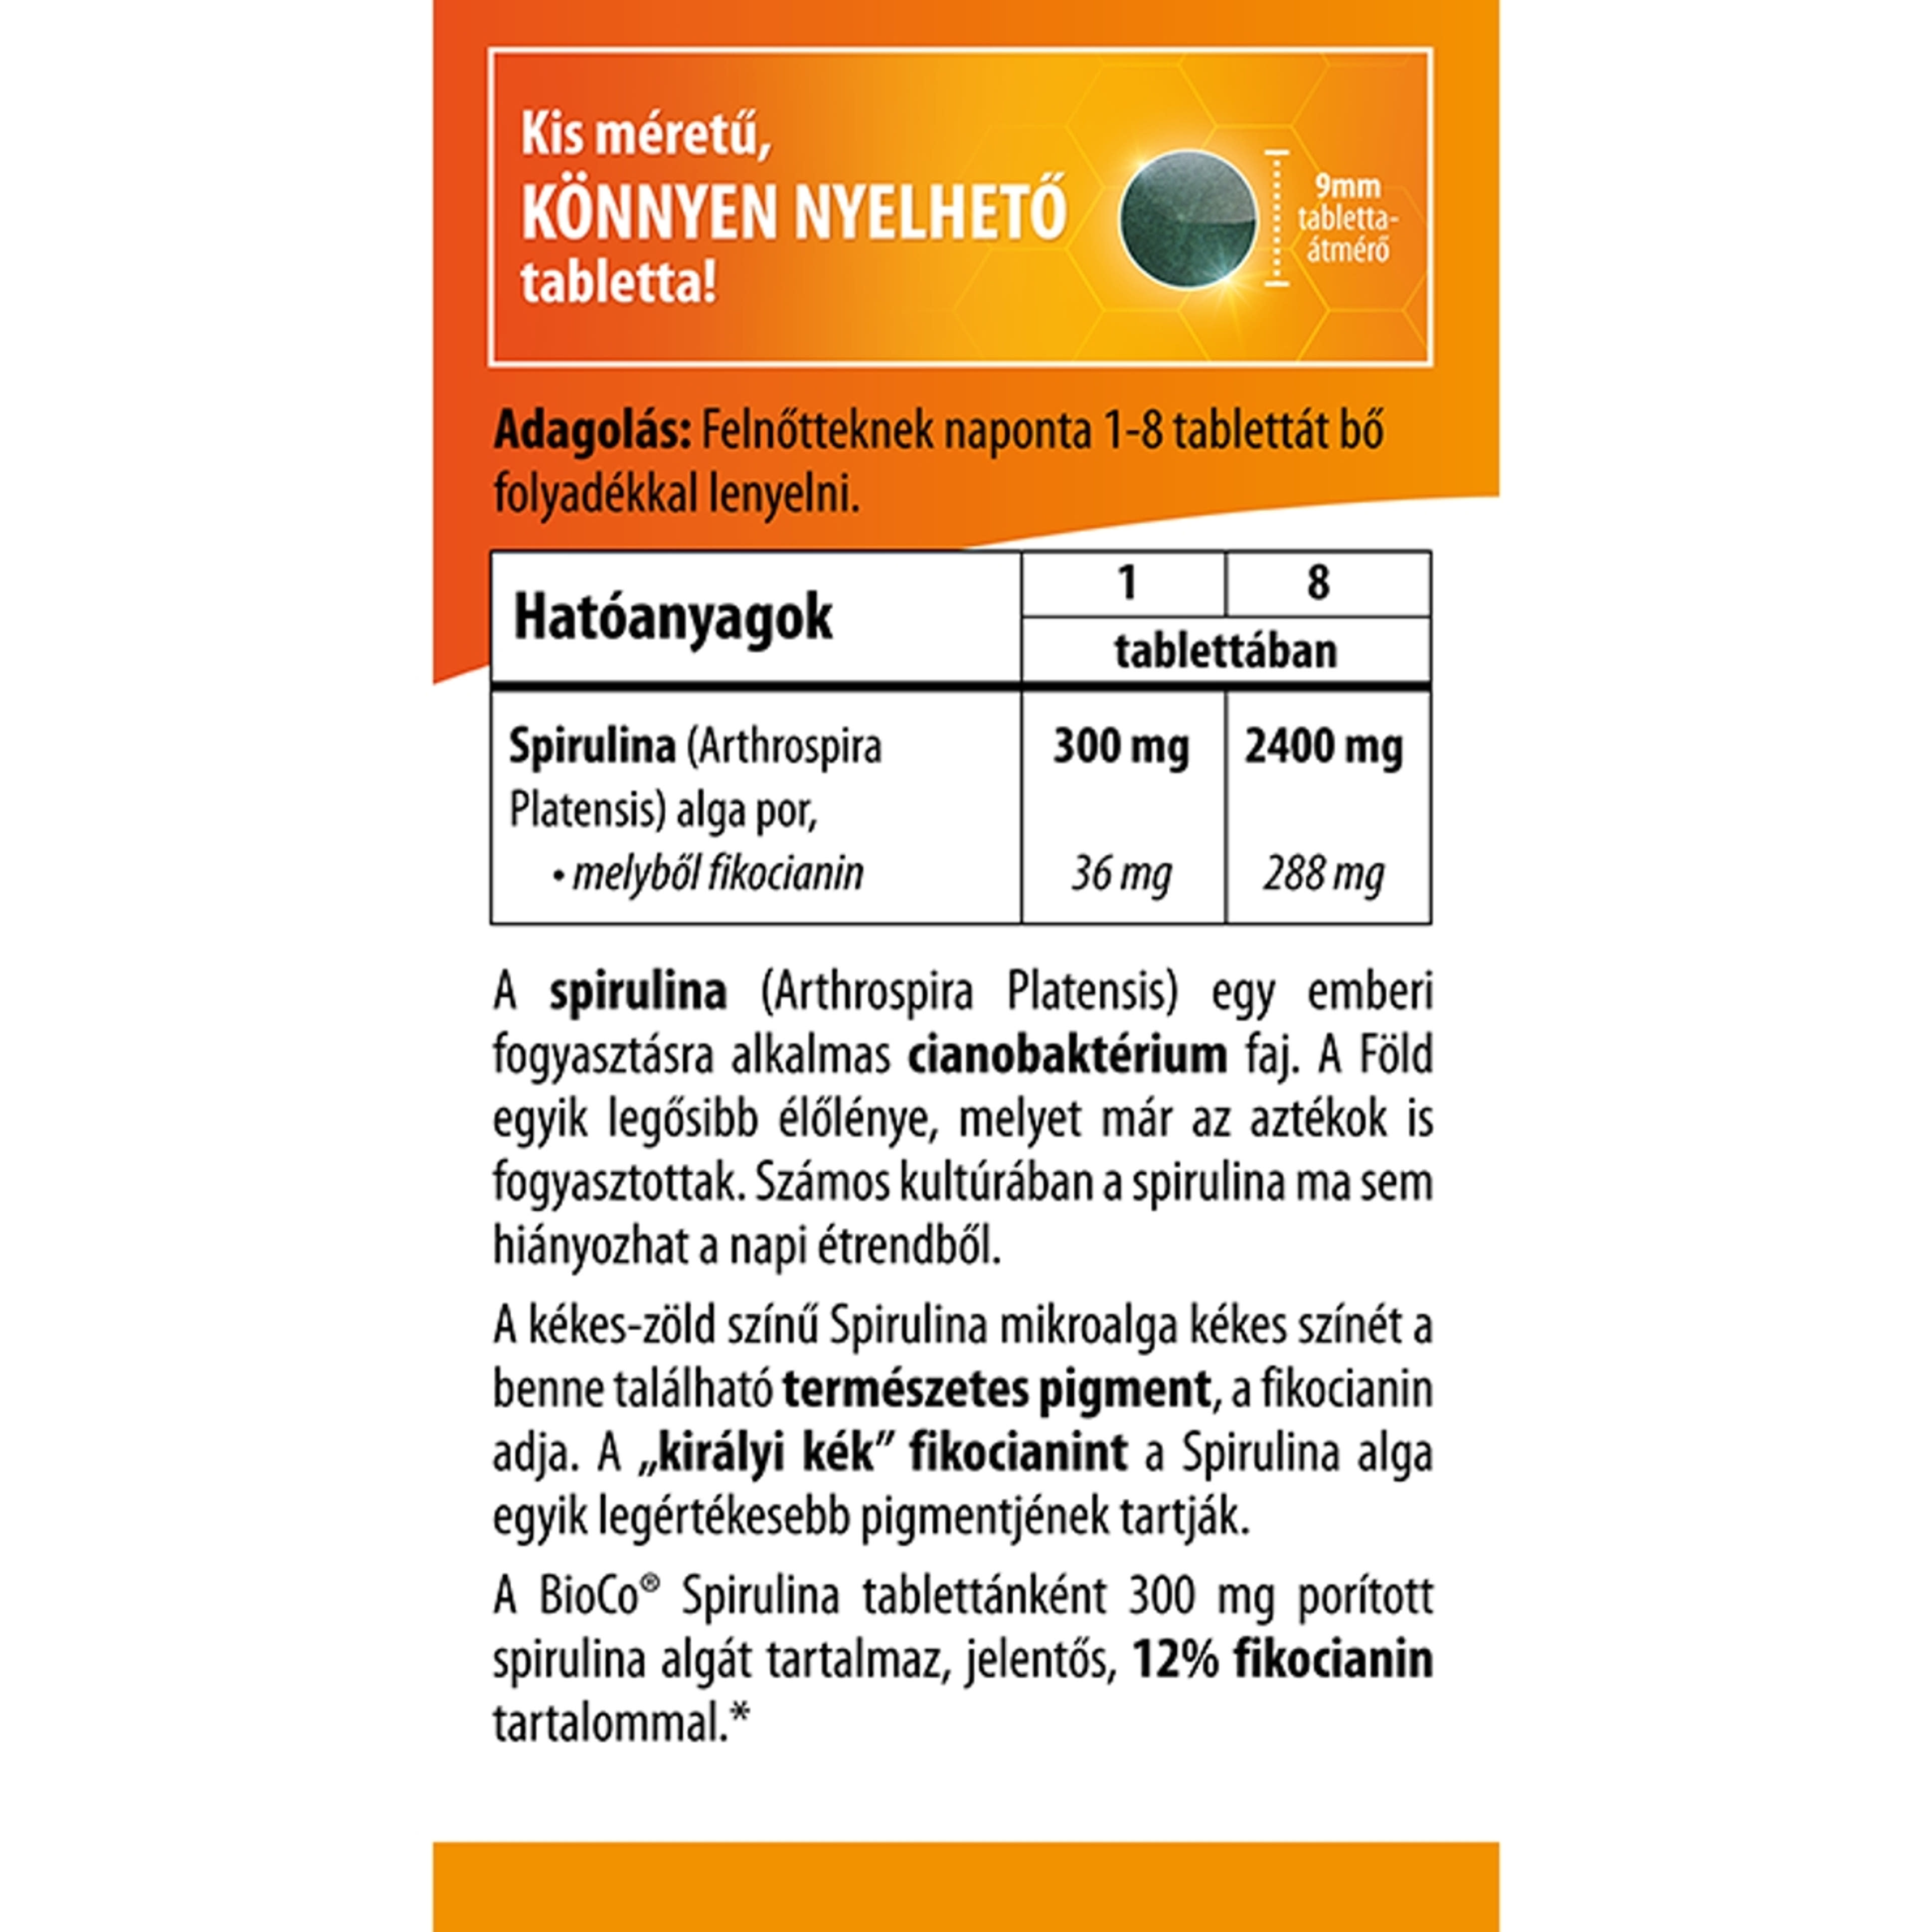 Bioco Spirulina Megapack étrendkiegészítő tabletta - 200 db-2